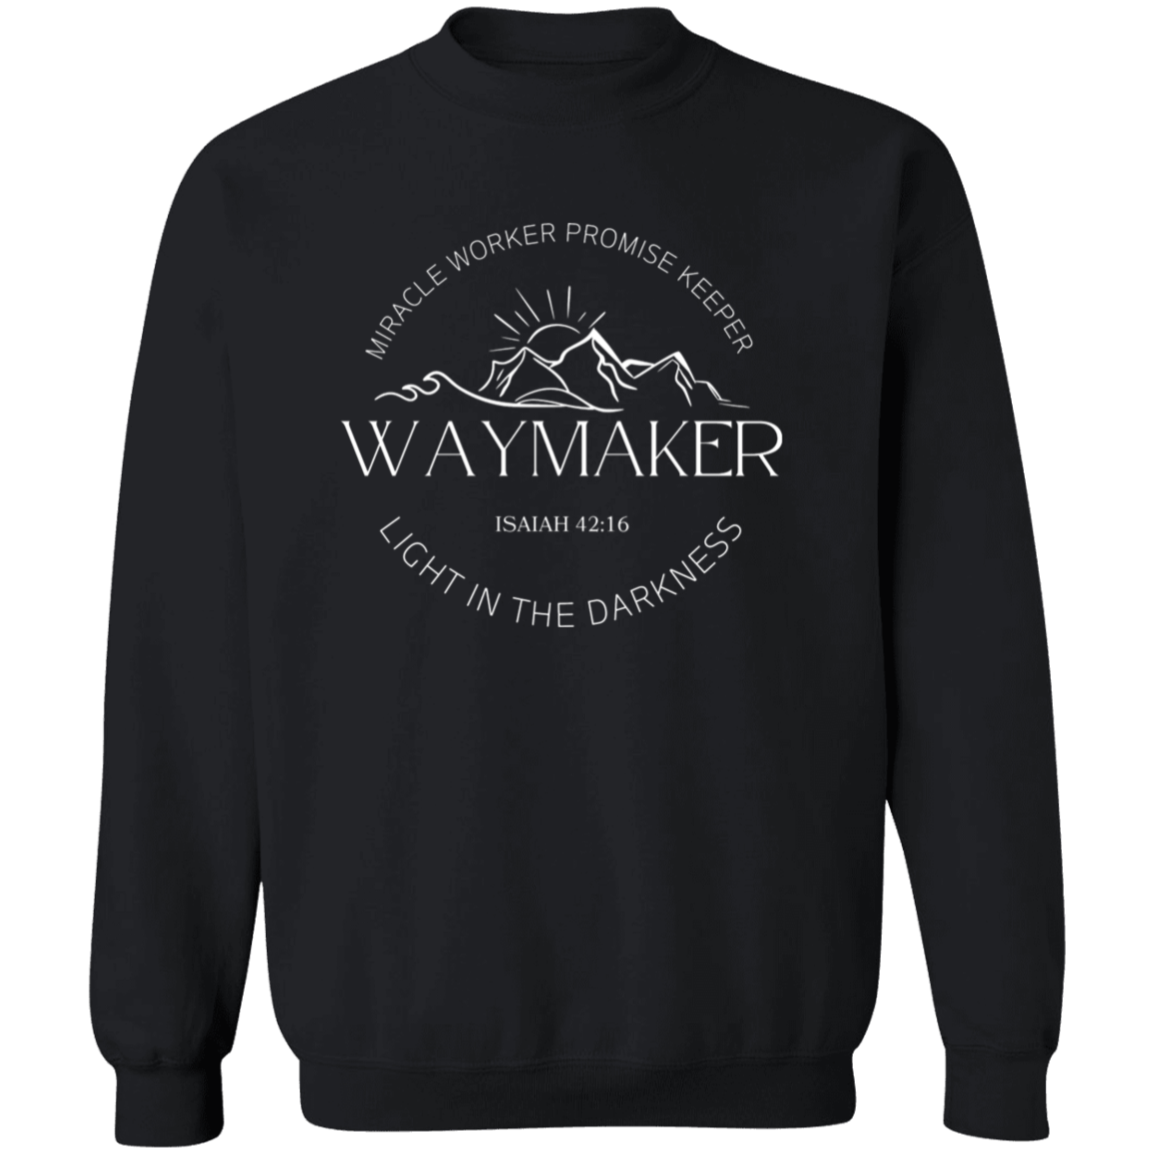 Waymaker Sweatshirt, Faith Sweatshirt, Christian Sweatshirt, Jesus Sweatshirt, Bible Verse, Faith Shirt, Christian Gift